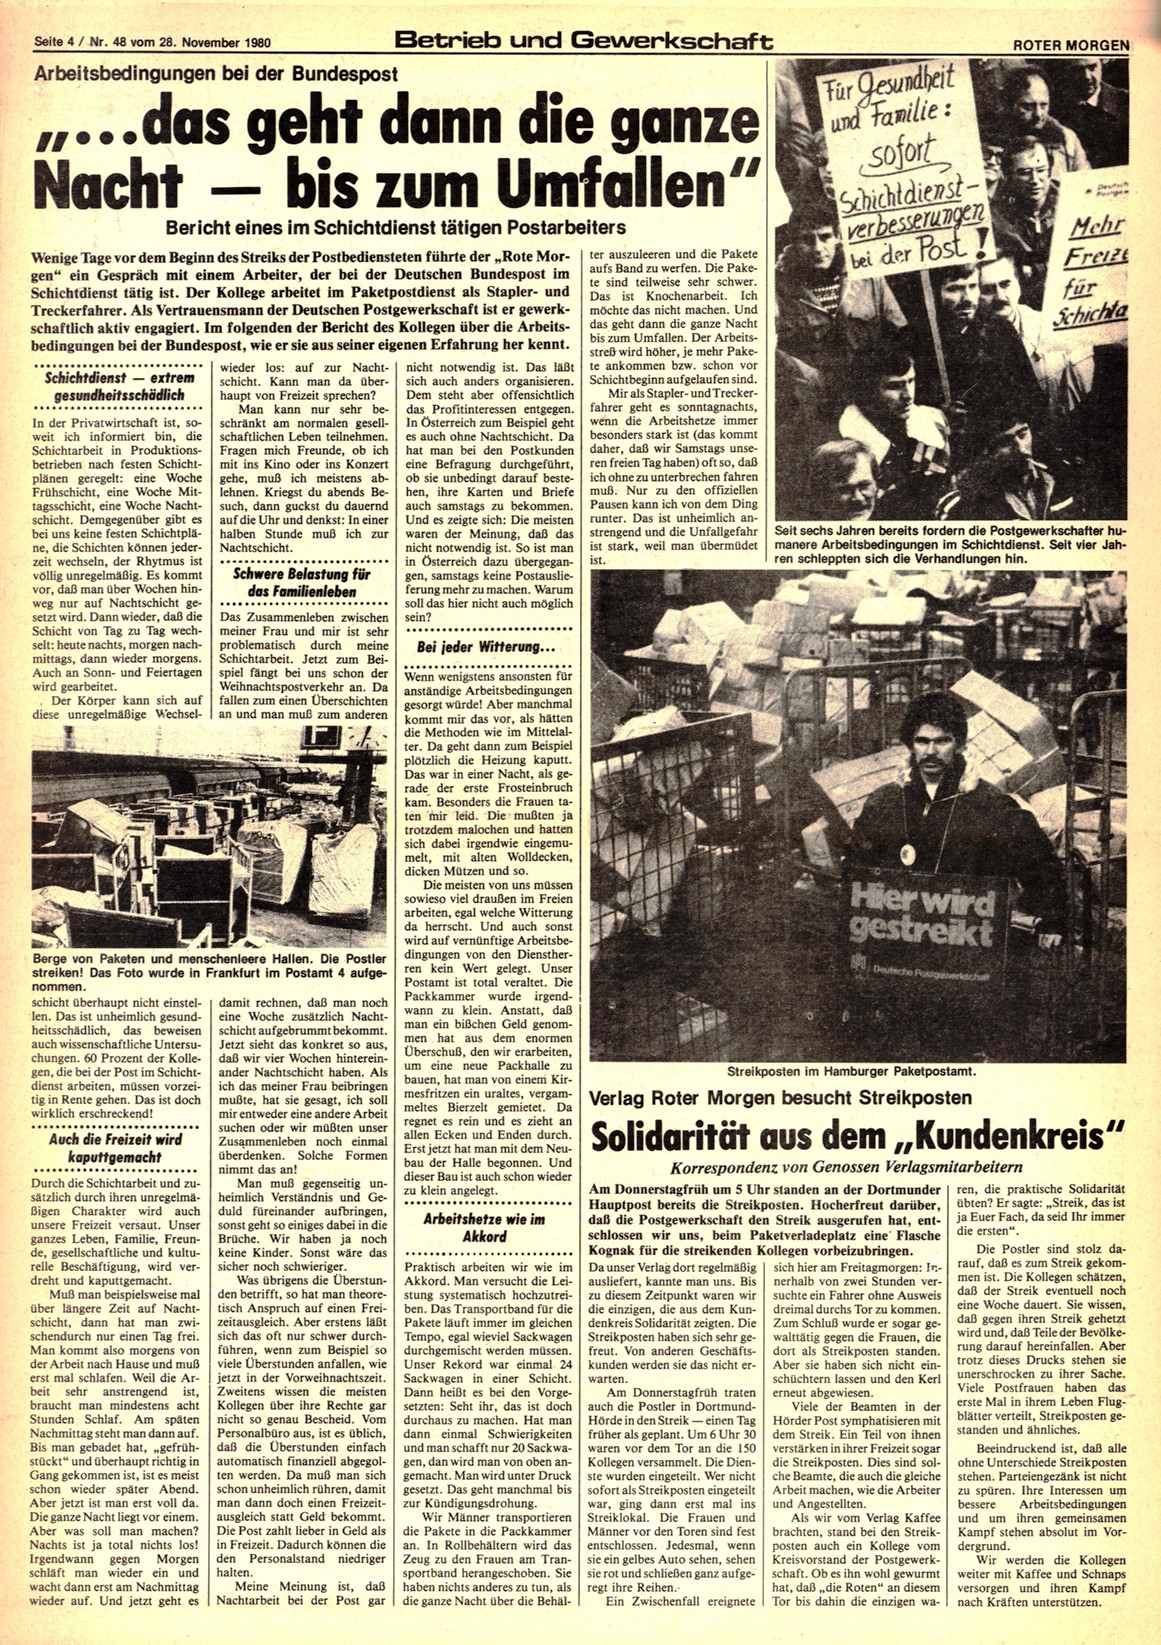 Roter Morgen, 14. Jg., 28. November 1980, Nr. 48, Seite 4